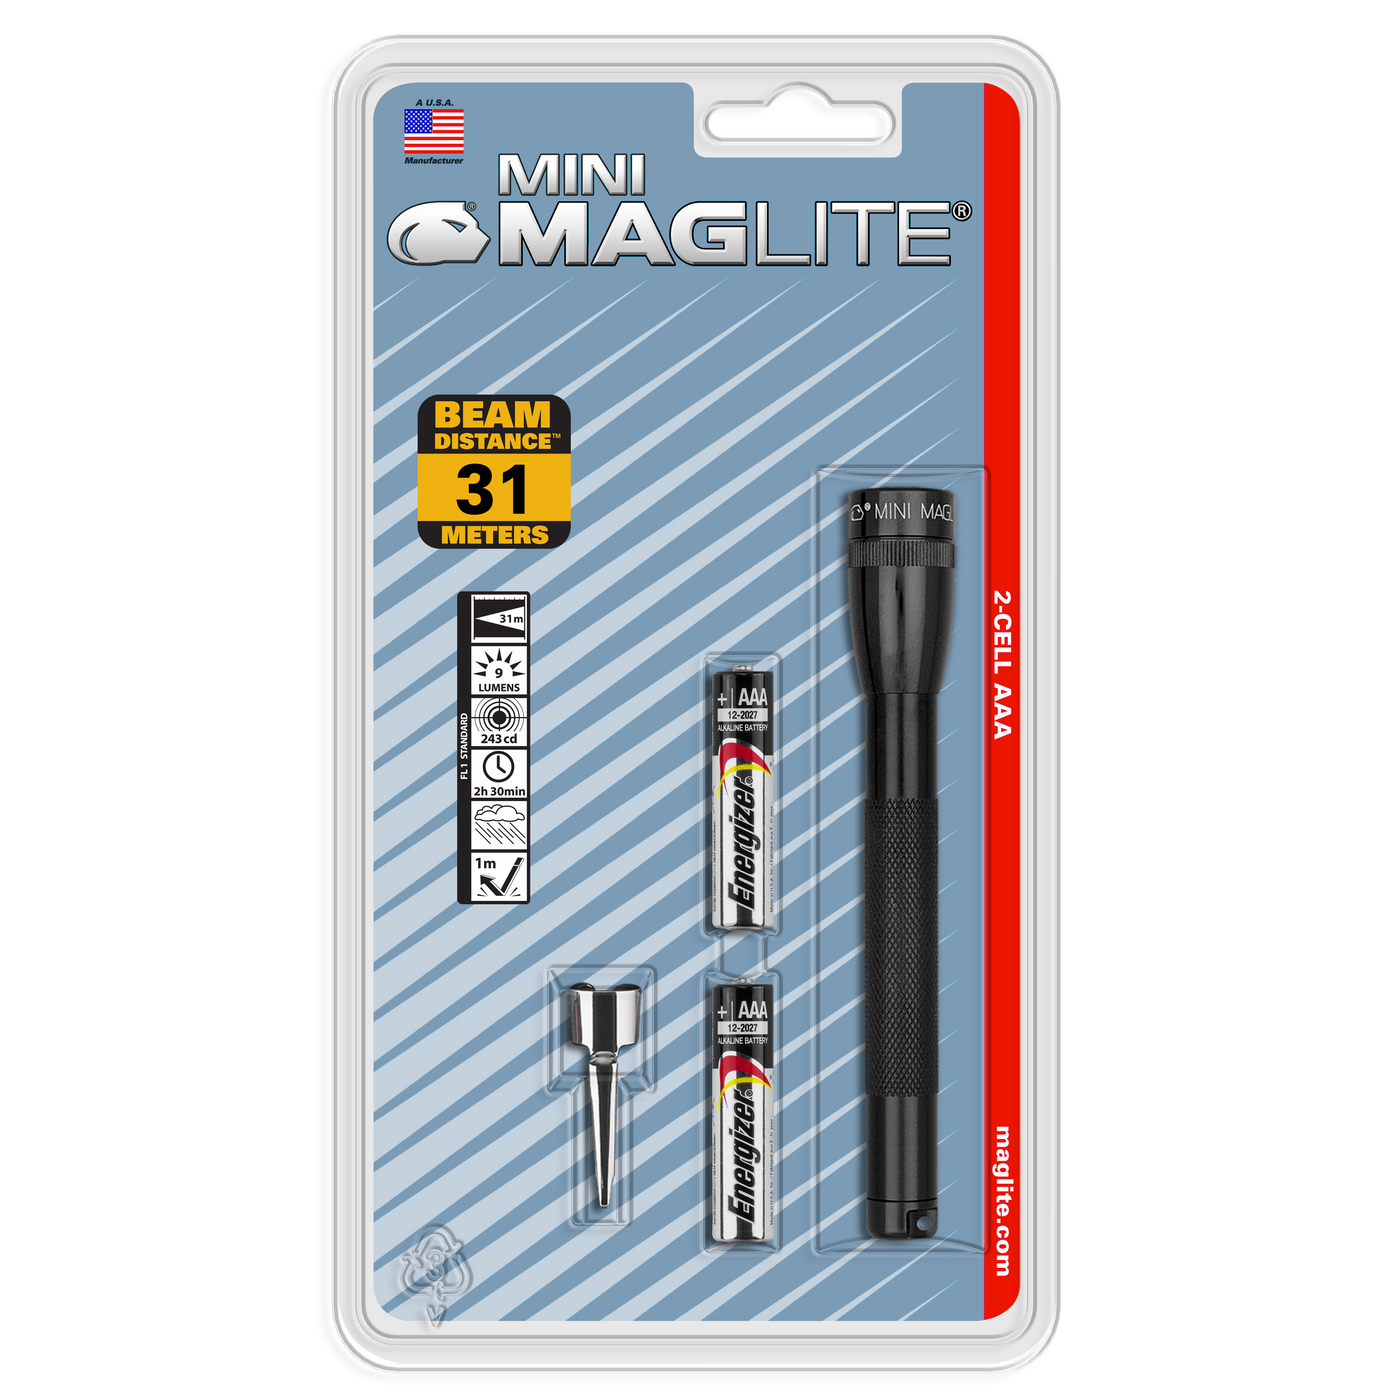 Mini Maglite 2AAA Classic Flashlight- Blister Pack